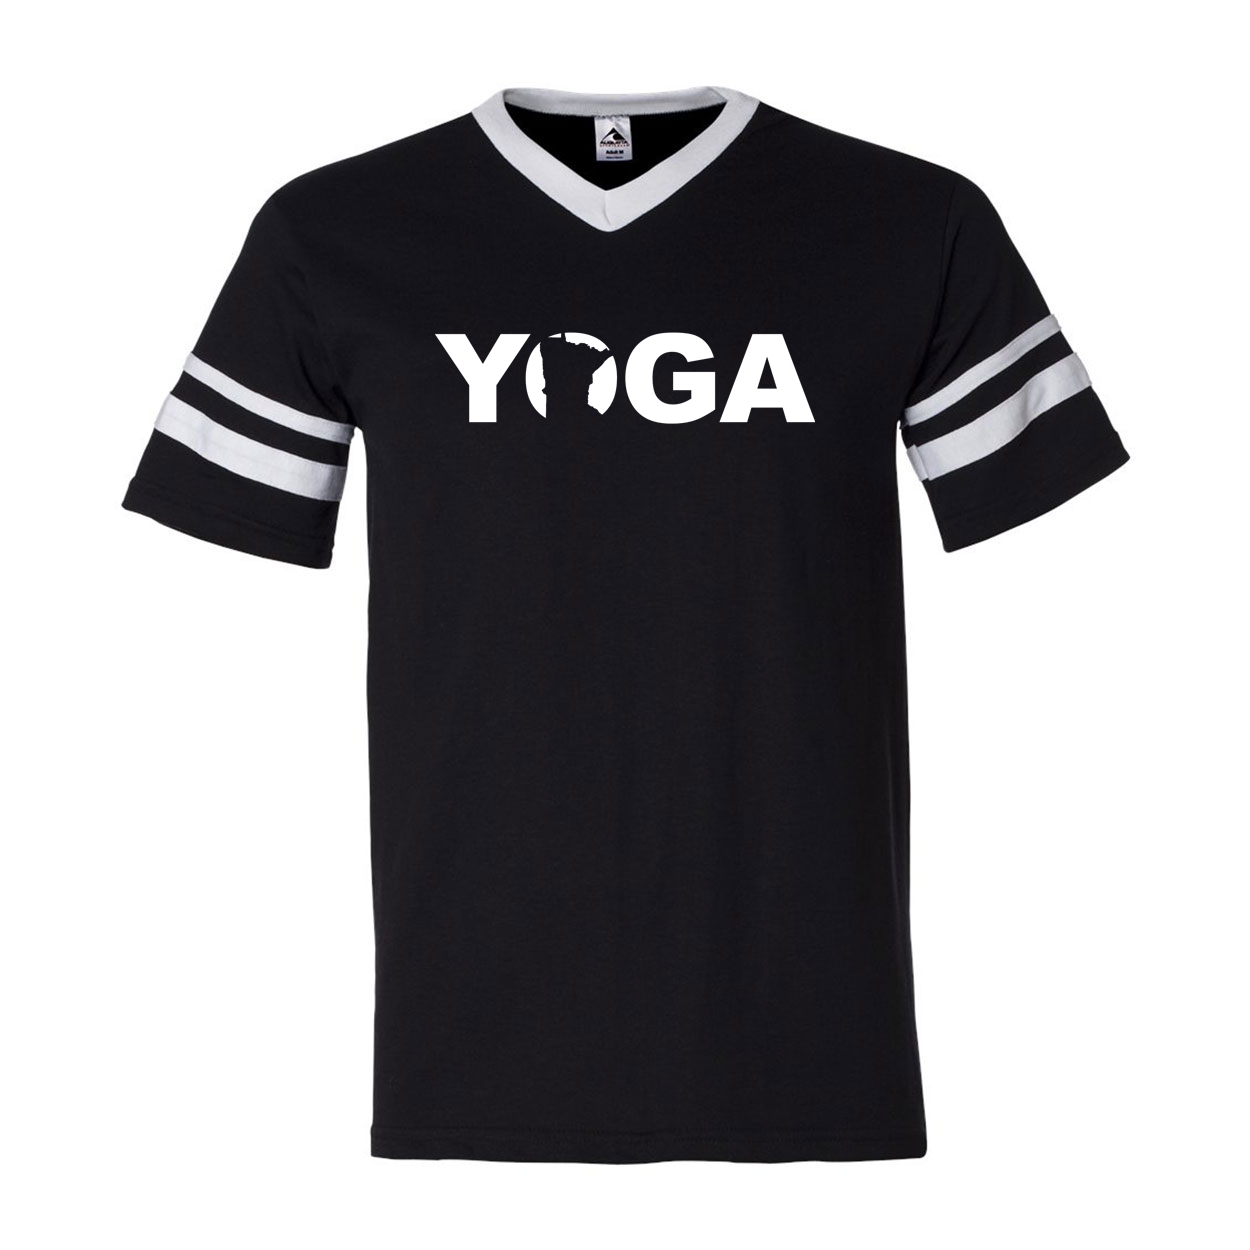 Yoga Minnesota Classic Premium Striped Jersey T-Shirt Black/White (White Logo)